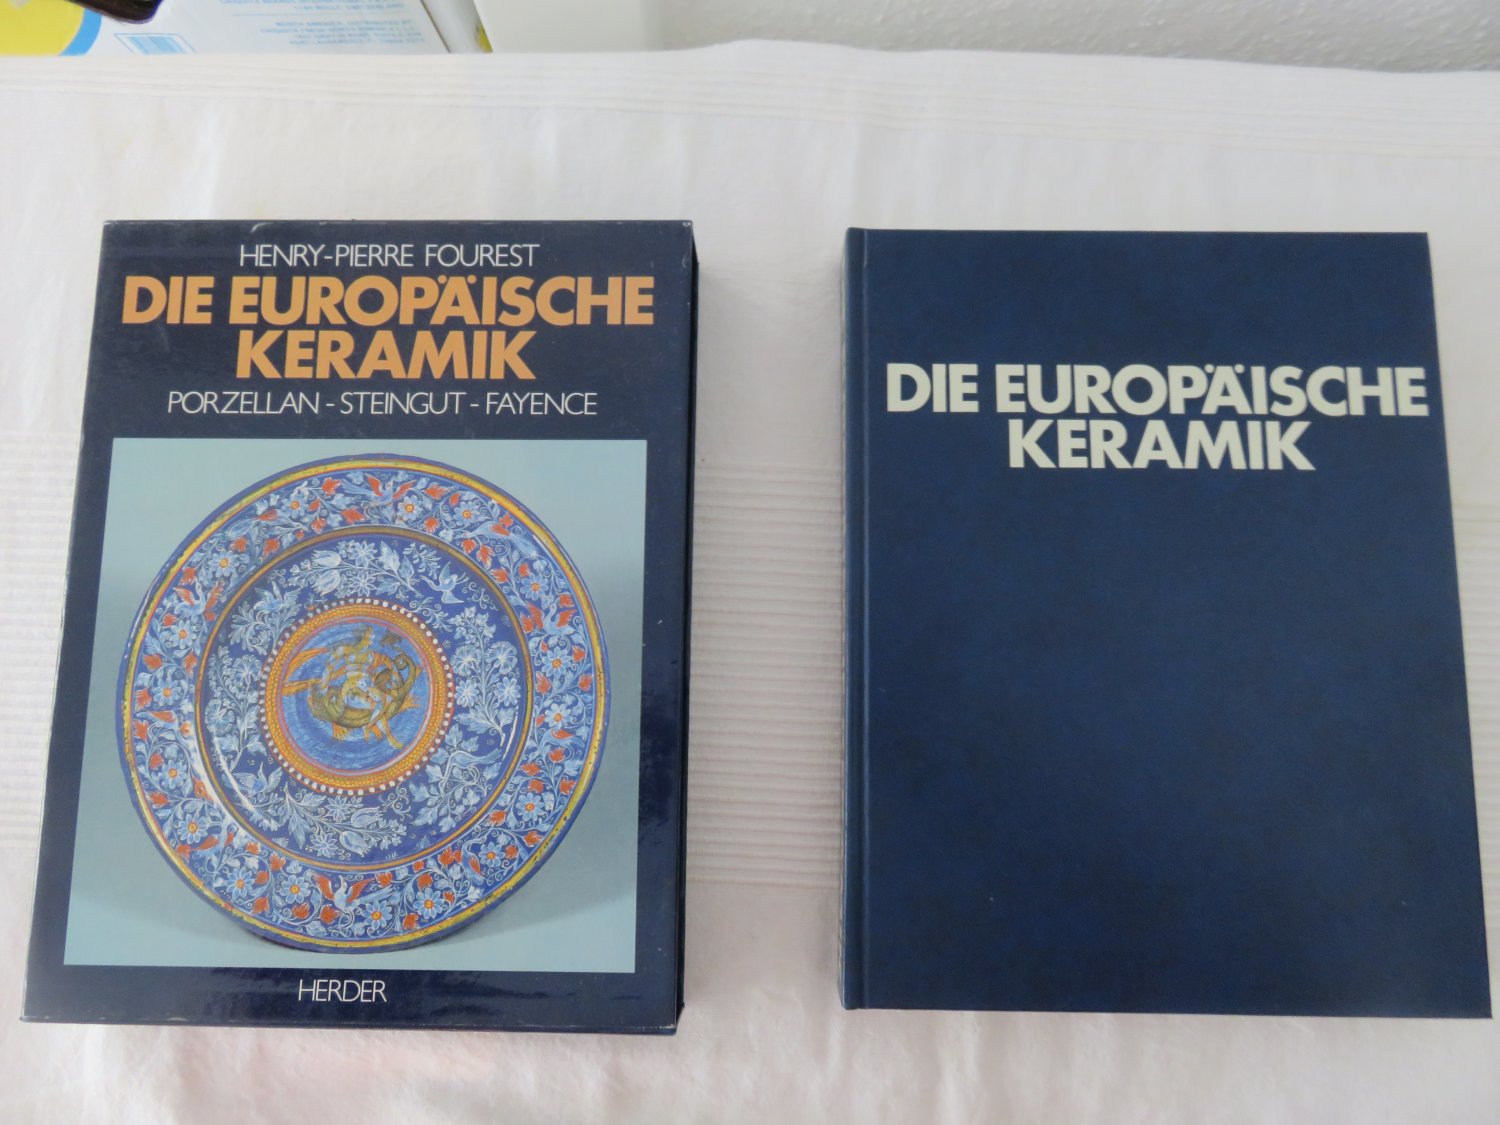 Fachbuch Europäische Keramik seit 1950 incl Marken STARK REDUZIERT NEU und OVP